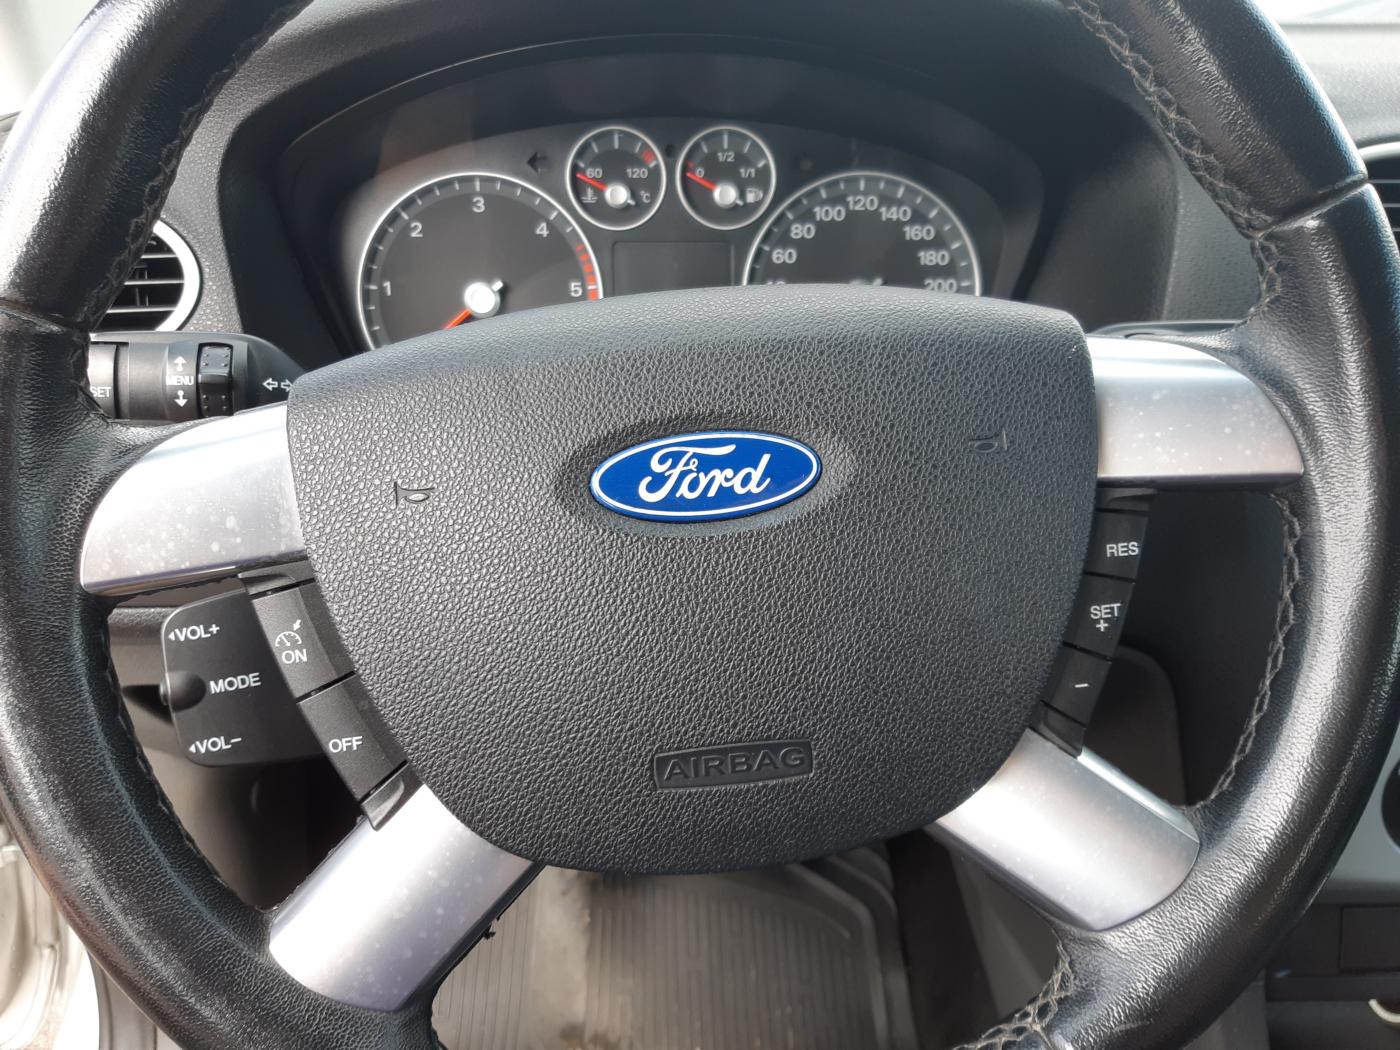 Ford Focus 1.8 TDCI